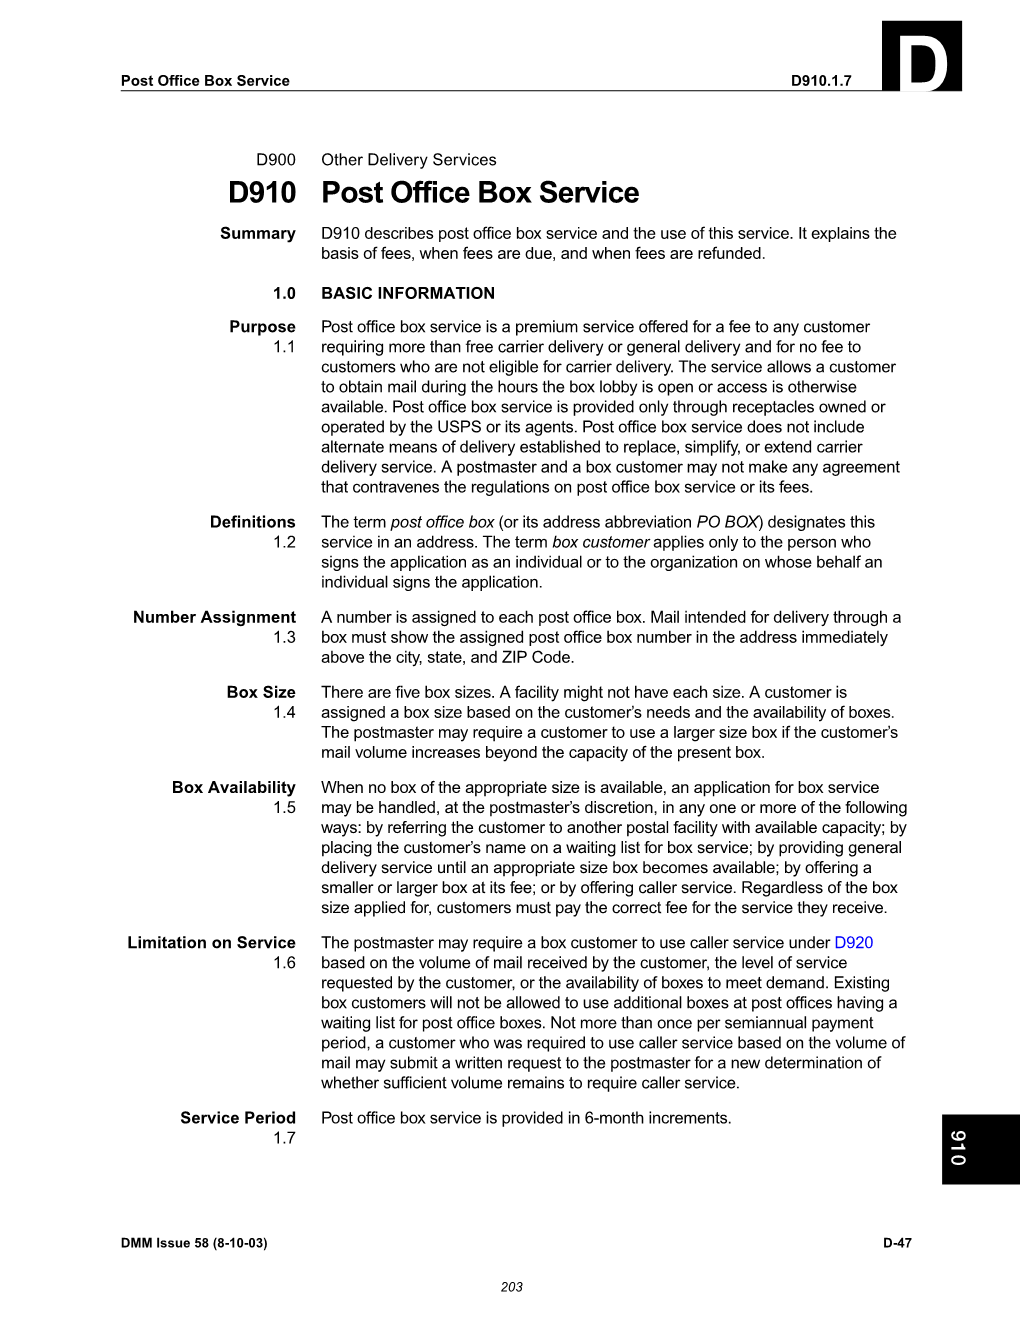 DMM D910 Post Office Box Service